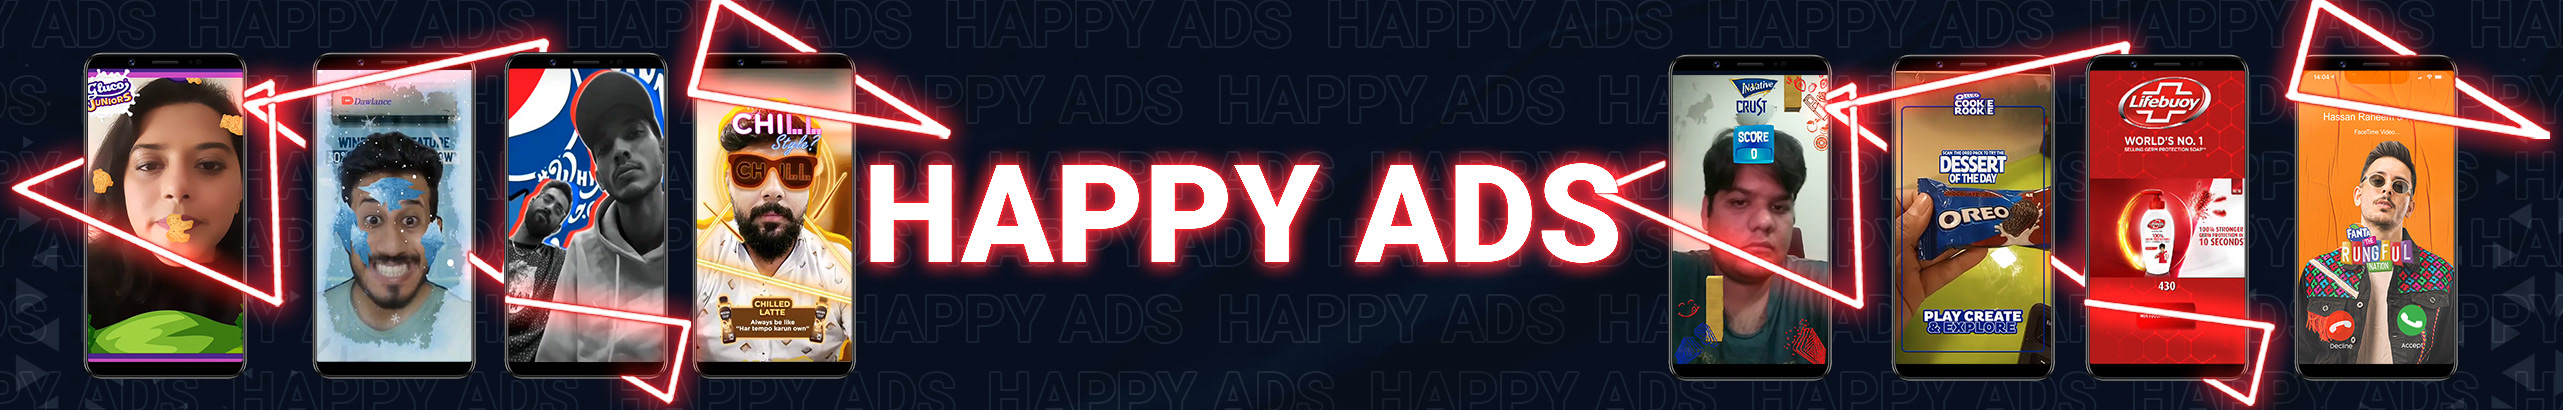 Happy Ads profil başlığı